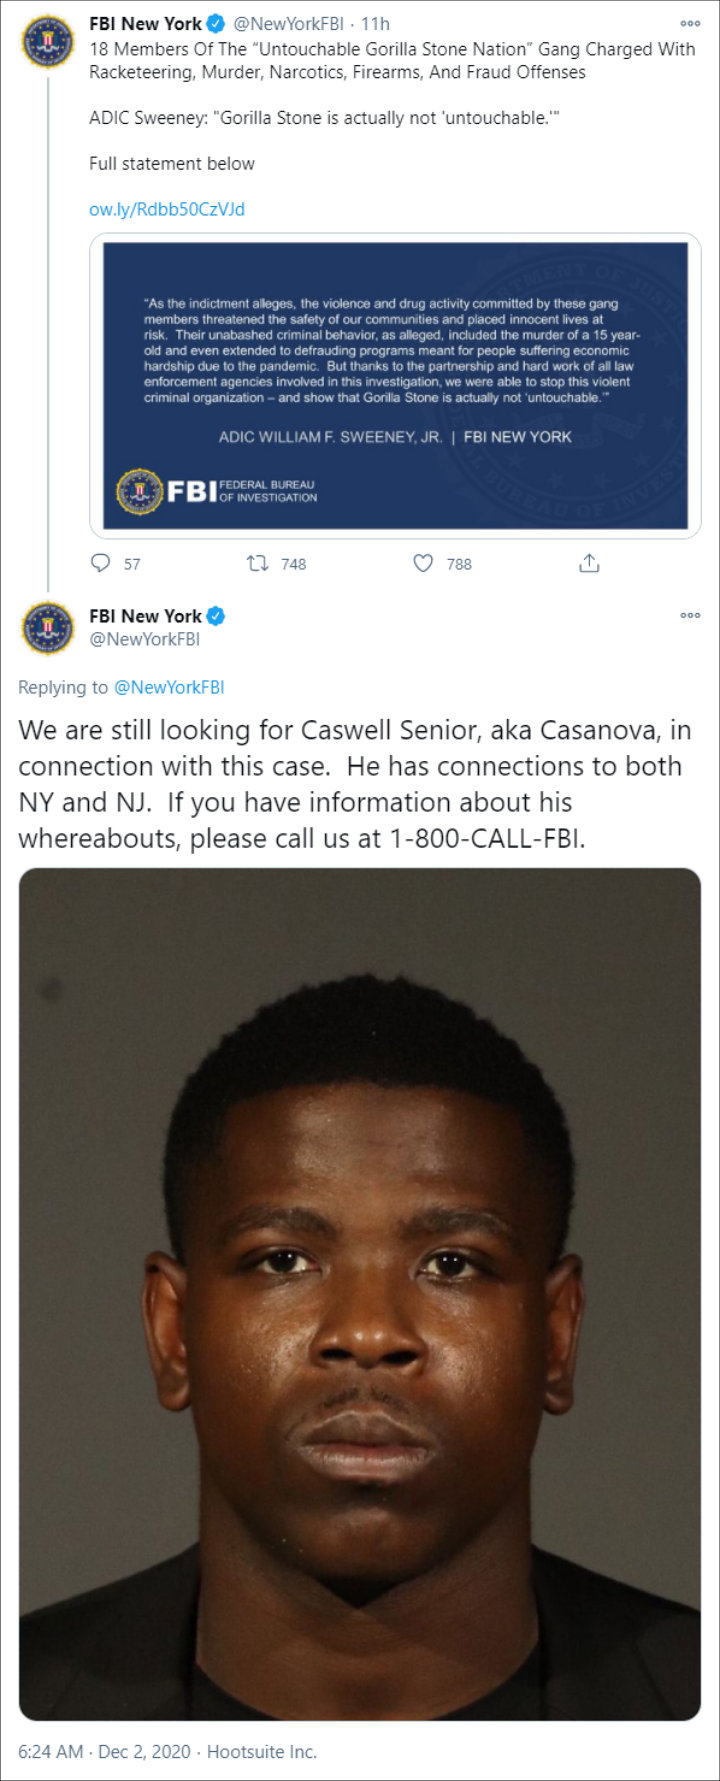 Rapper Casanova is indicted for multiple crimes